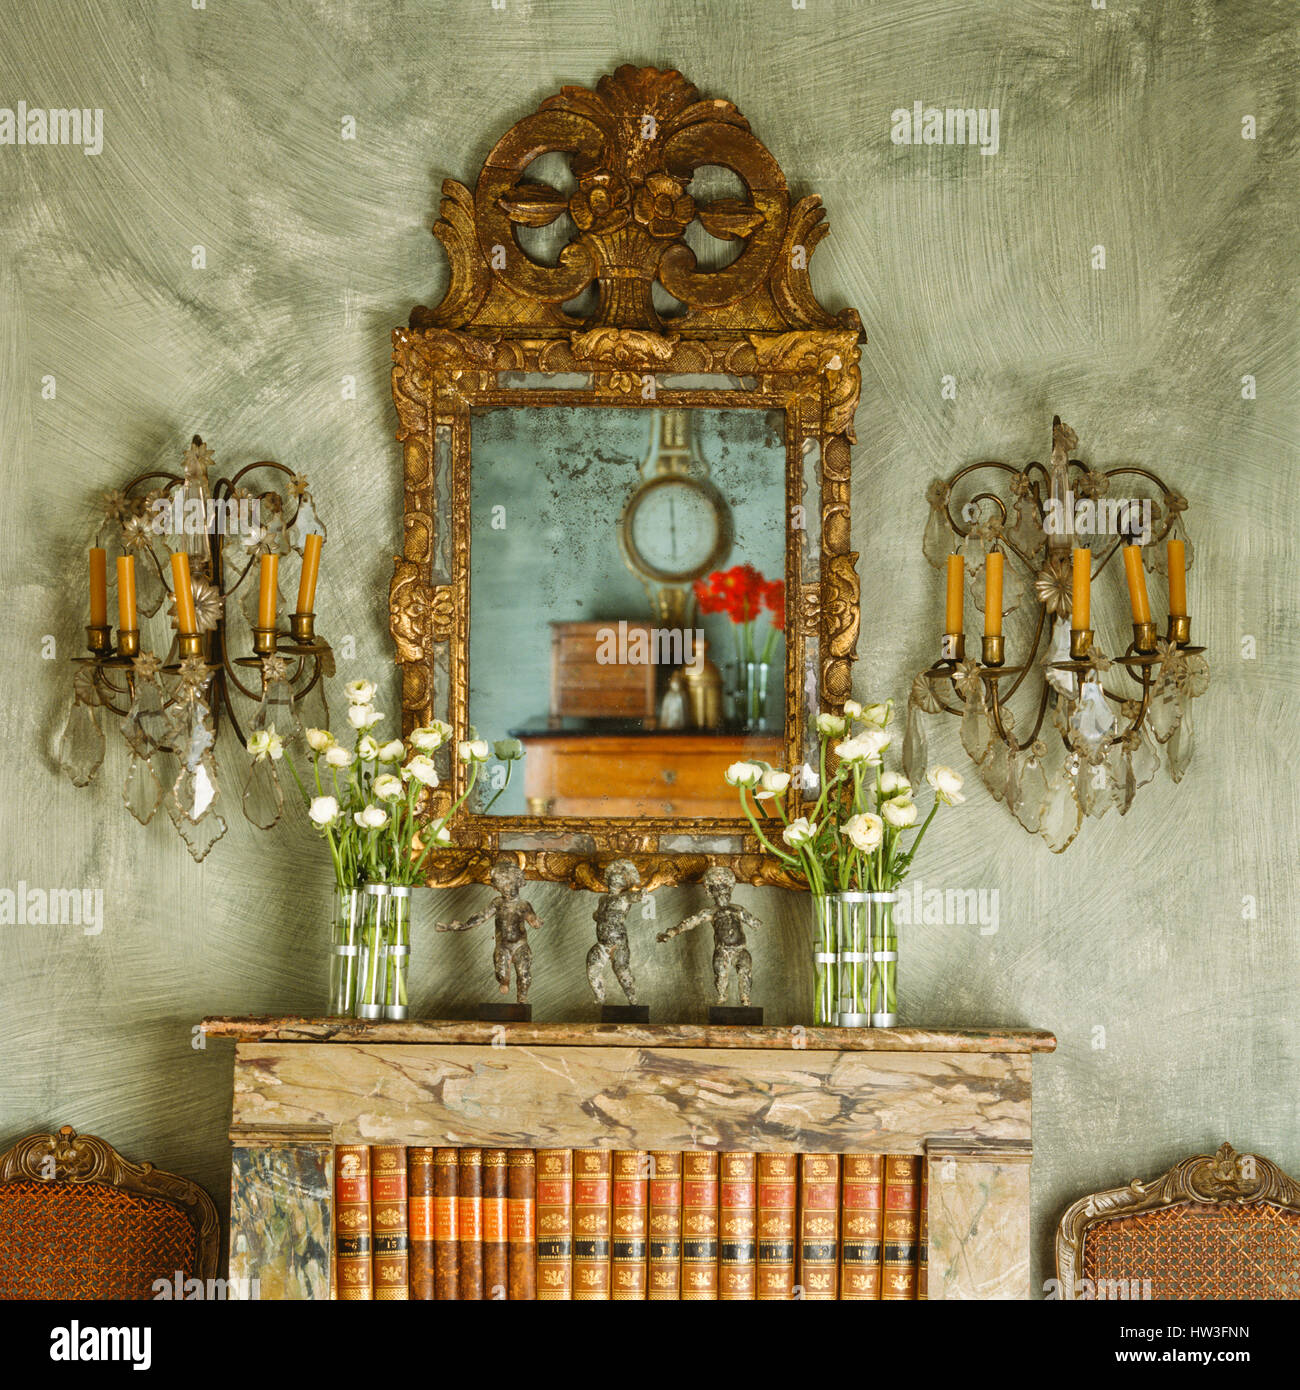 Ornate mirror above marble bookshelf. Stock Photo